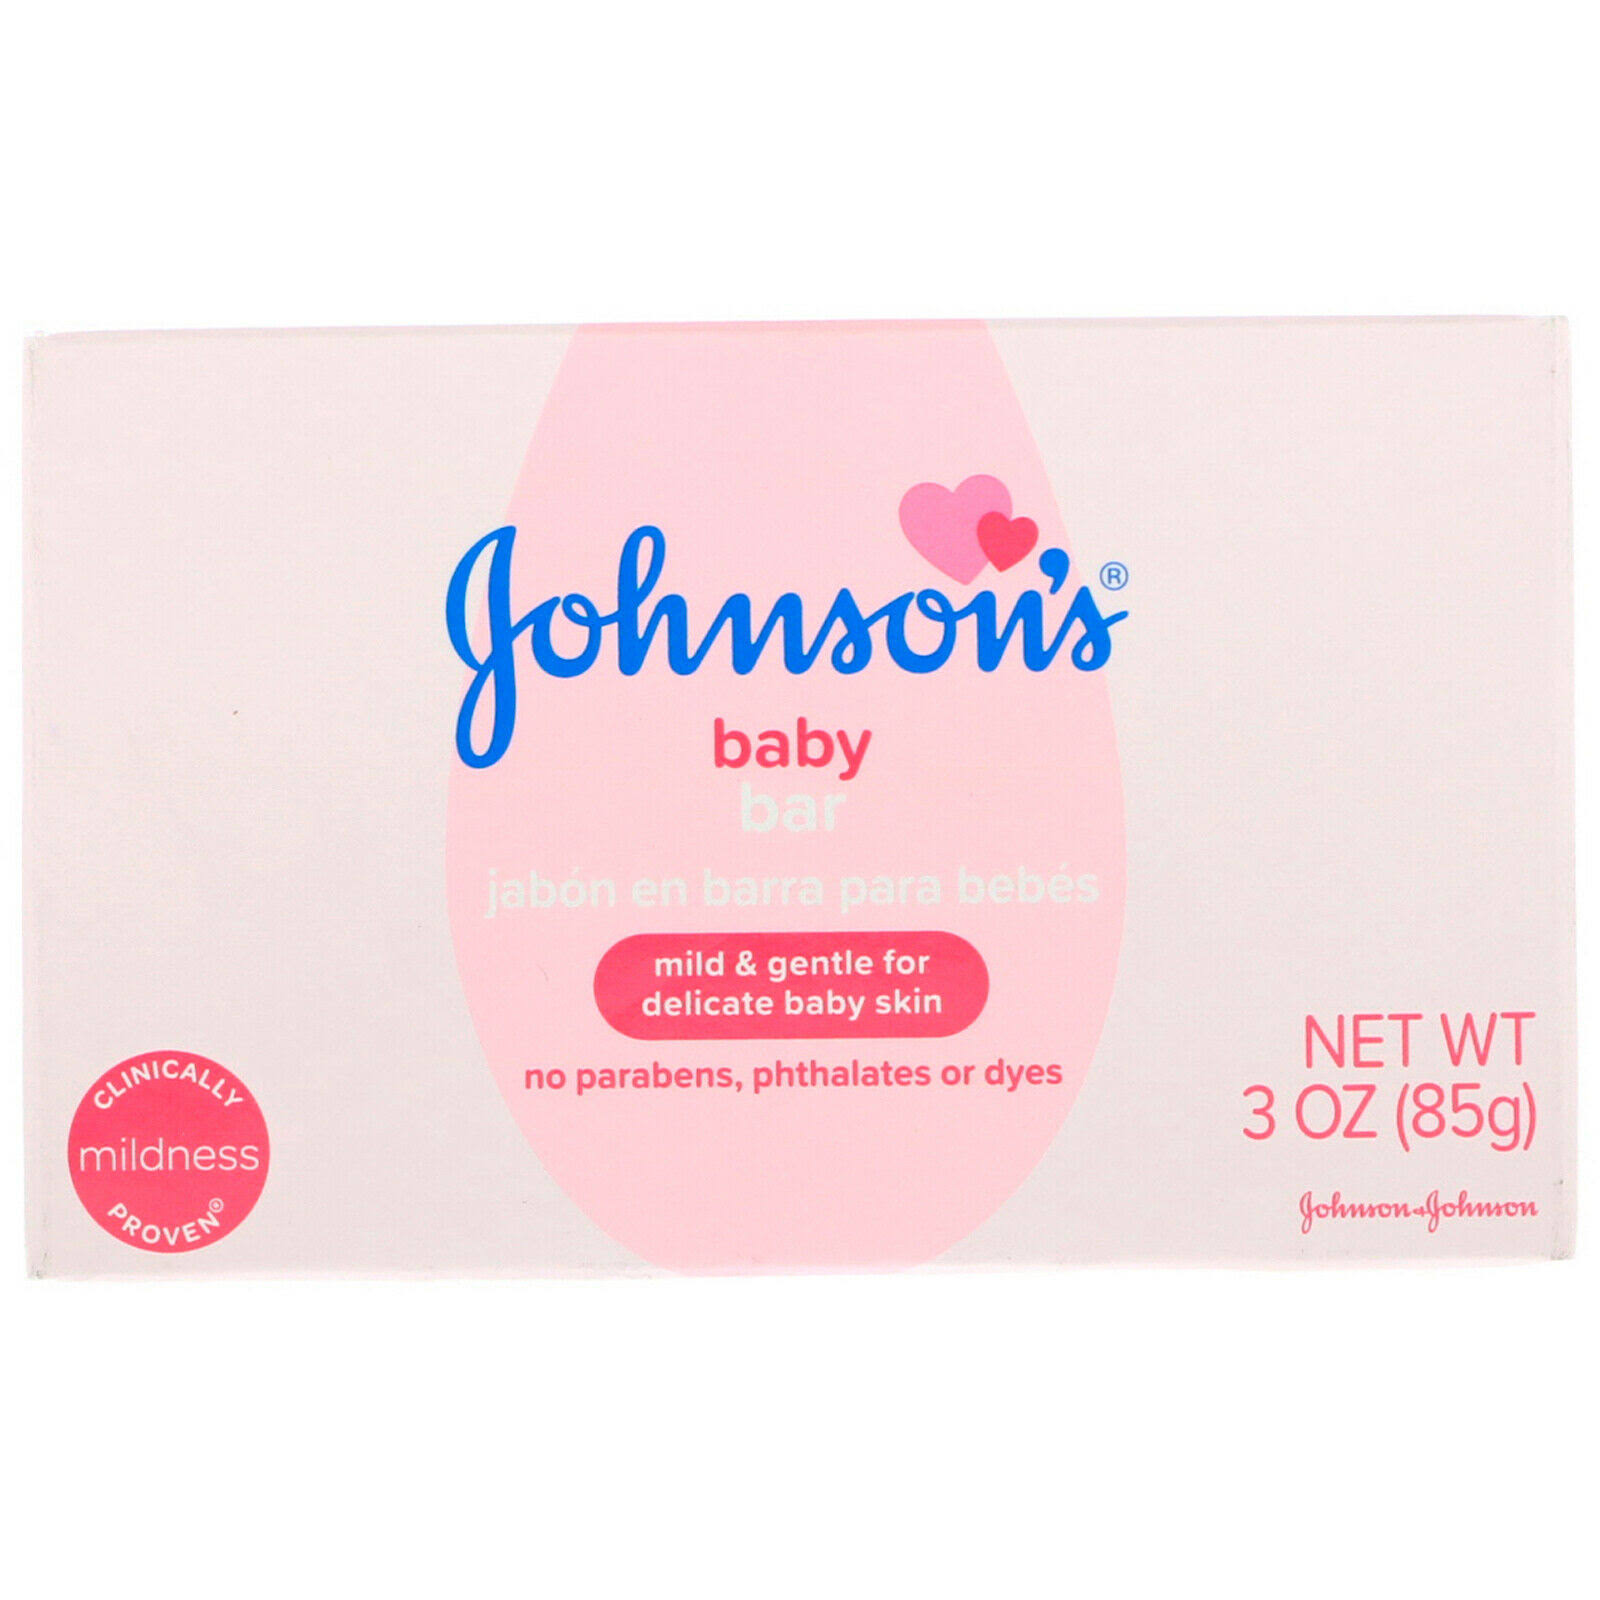 Johnson's Baby Bar Soap - 85g